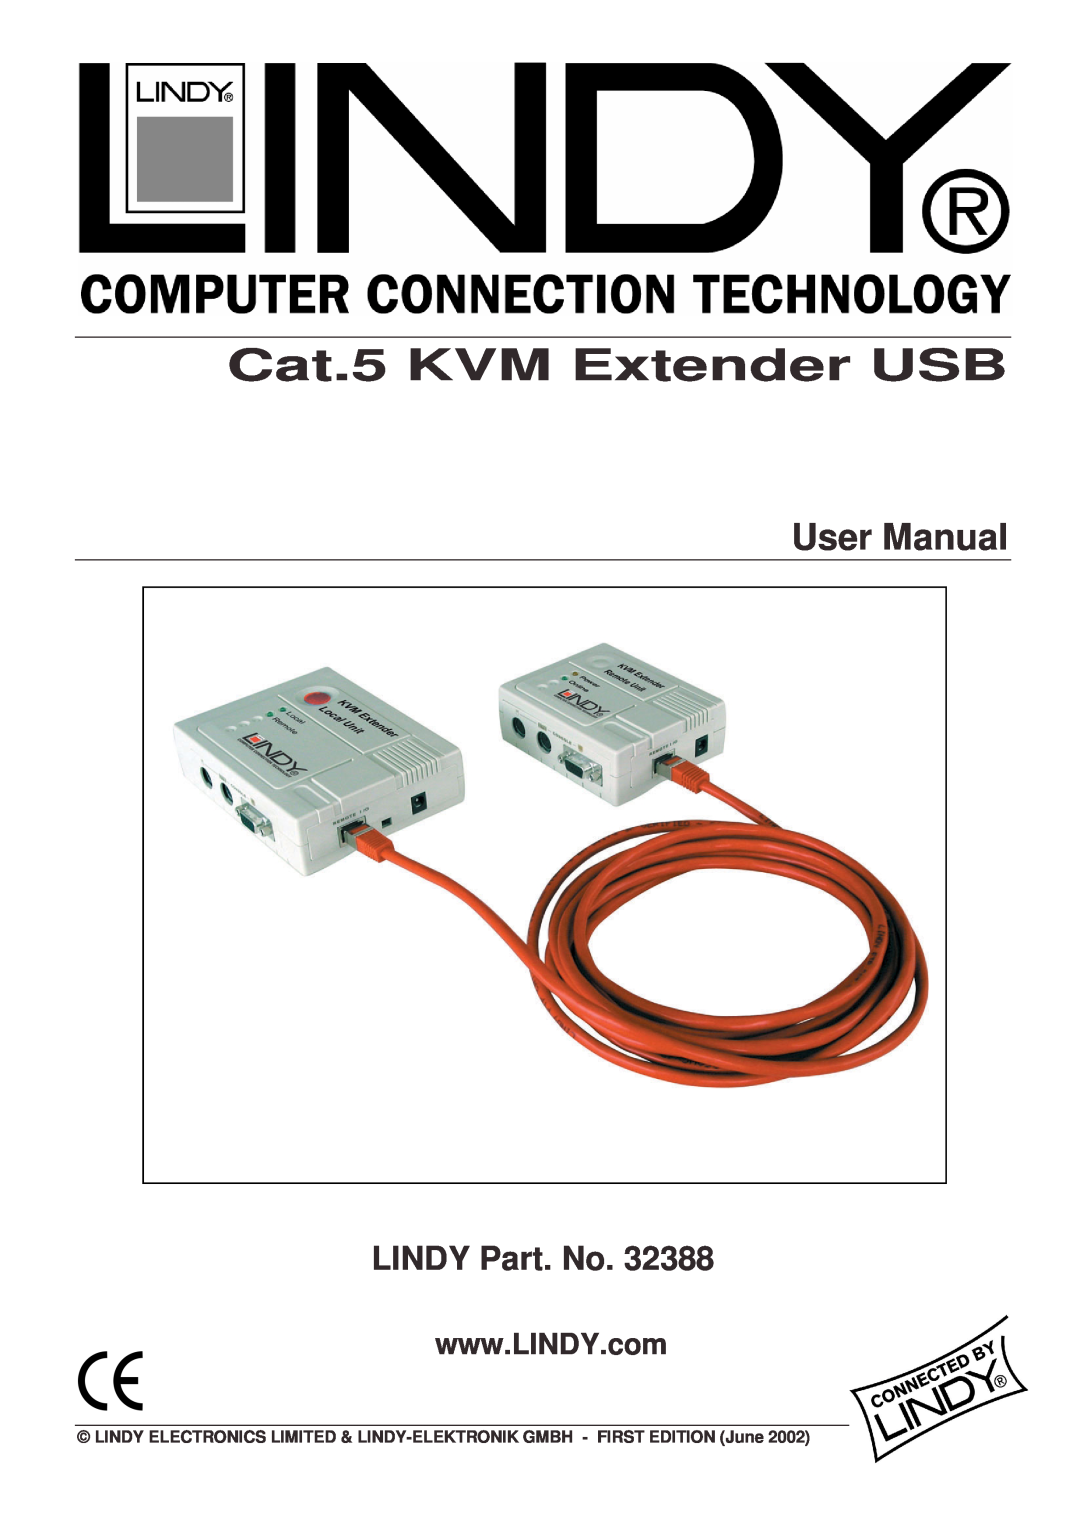 Lindy 32388 user manual Cat.5 KVM Extender USB, User Manual, LINDY Part. No 